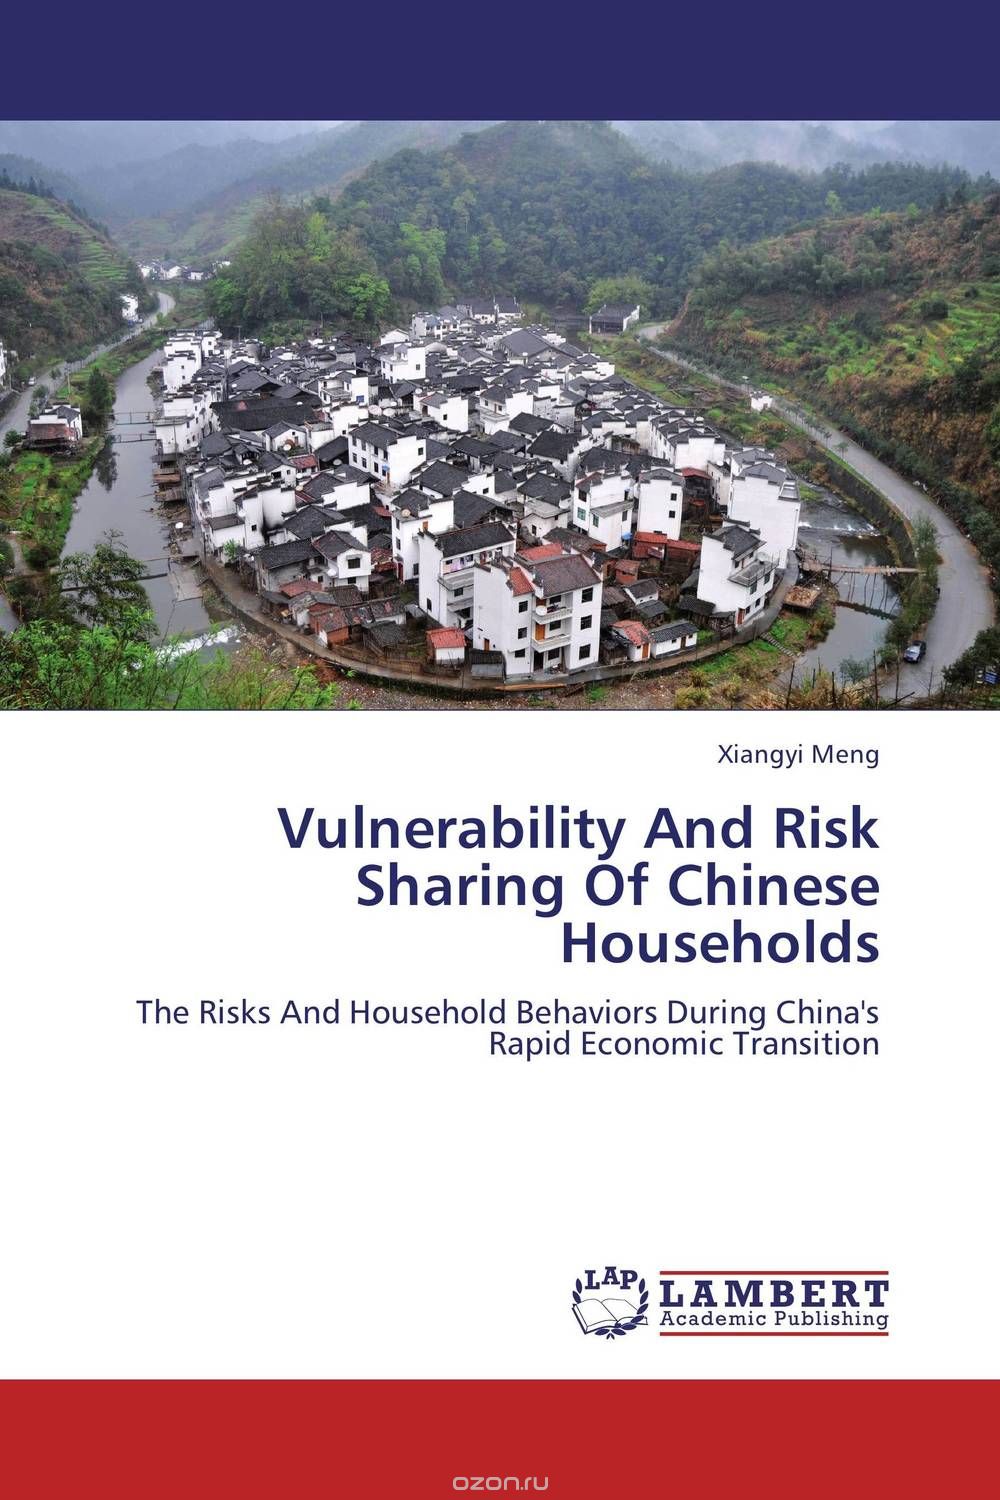 Скачать книгу "Vulnerability And Risk Sharing Of Chinese Households"